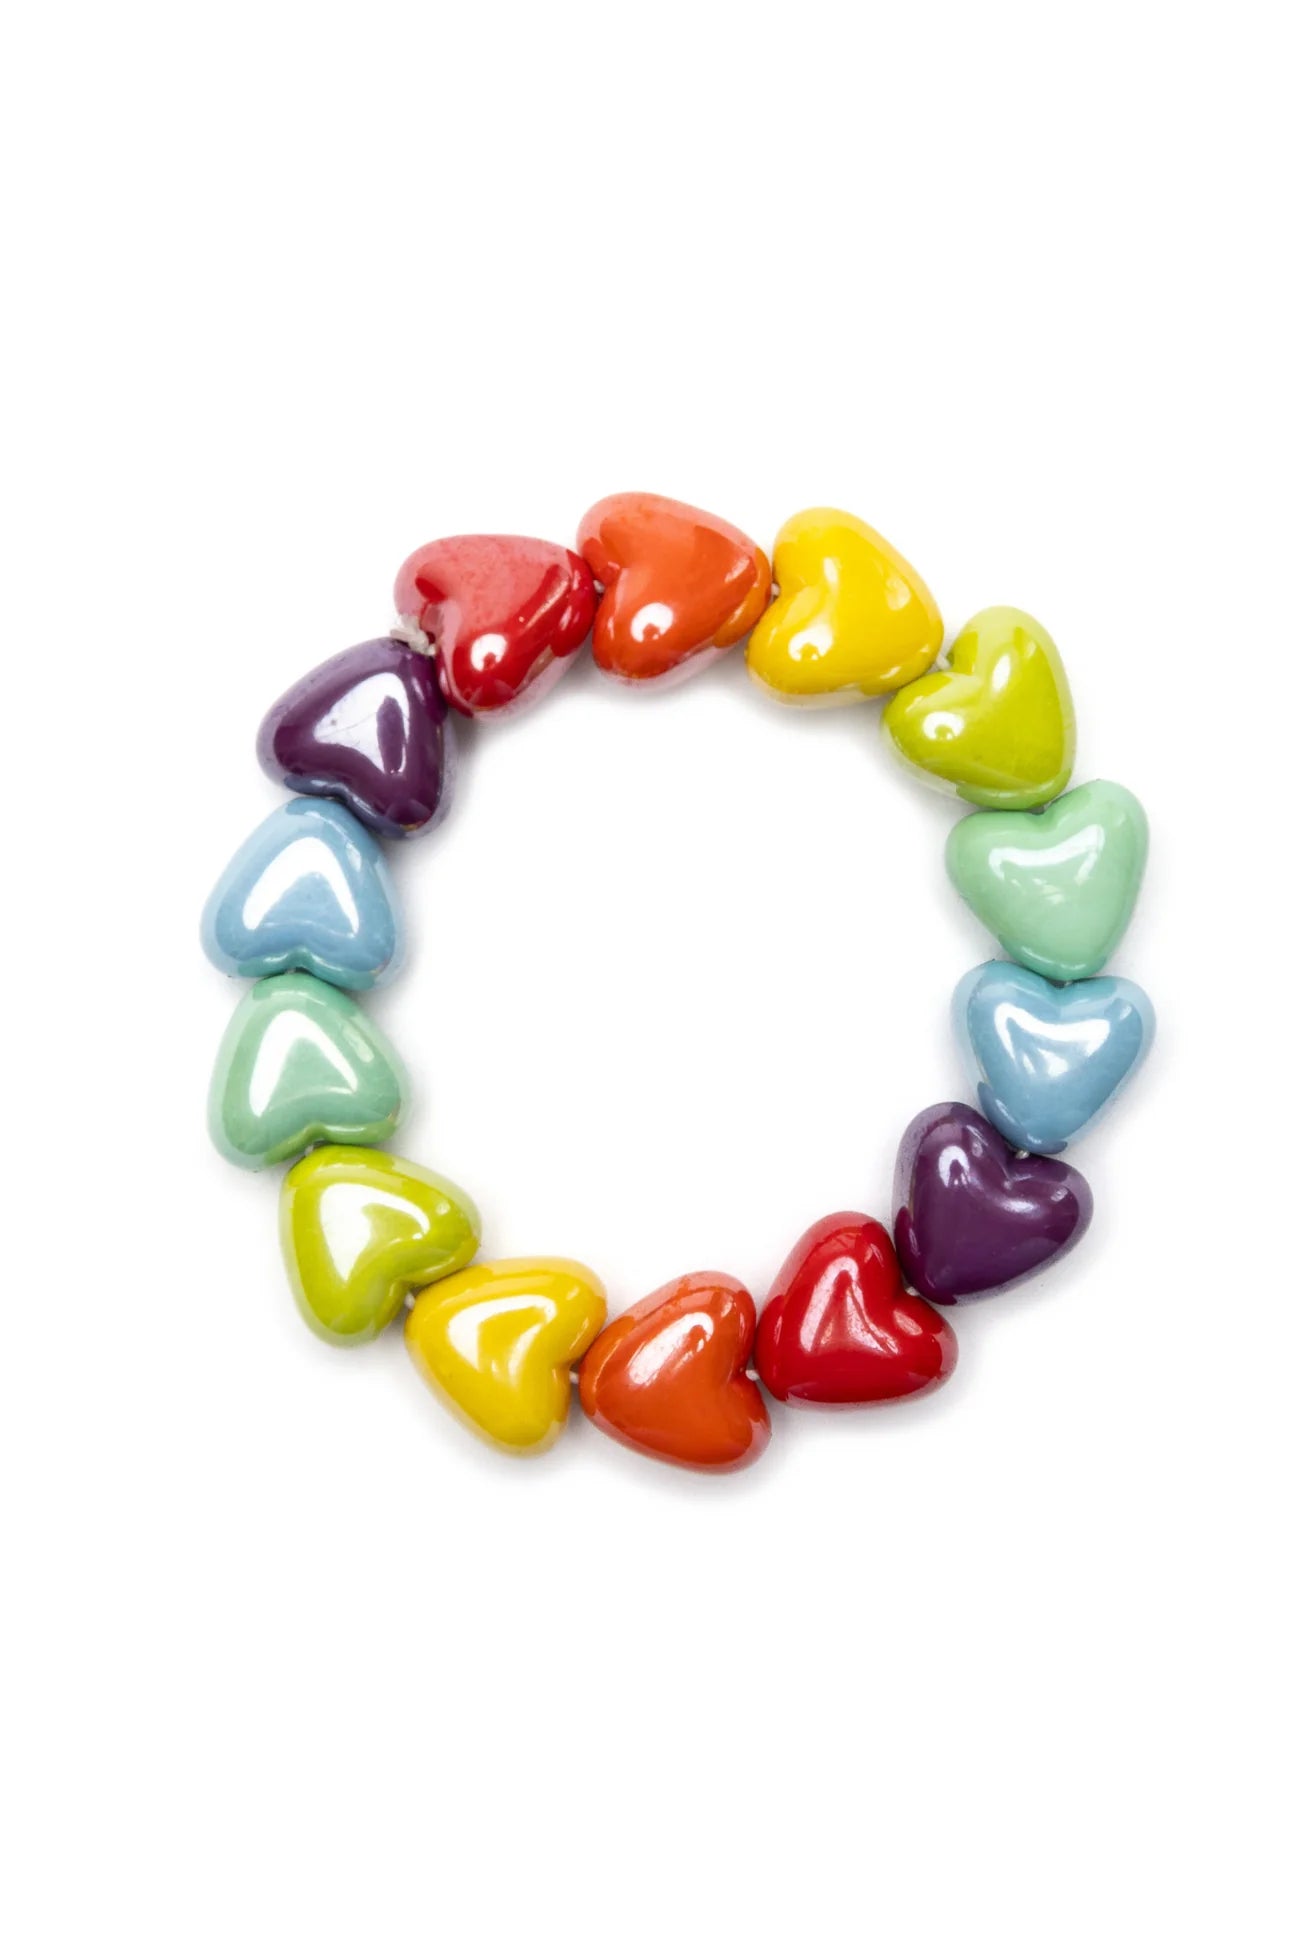 Colours of Love Bracelet by Great Pretenders # 84118